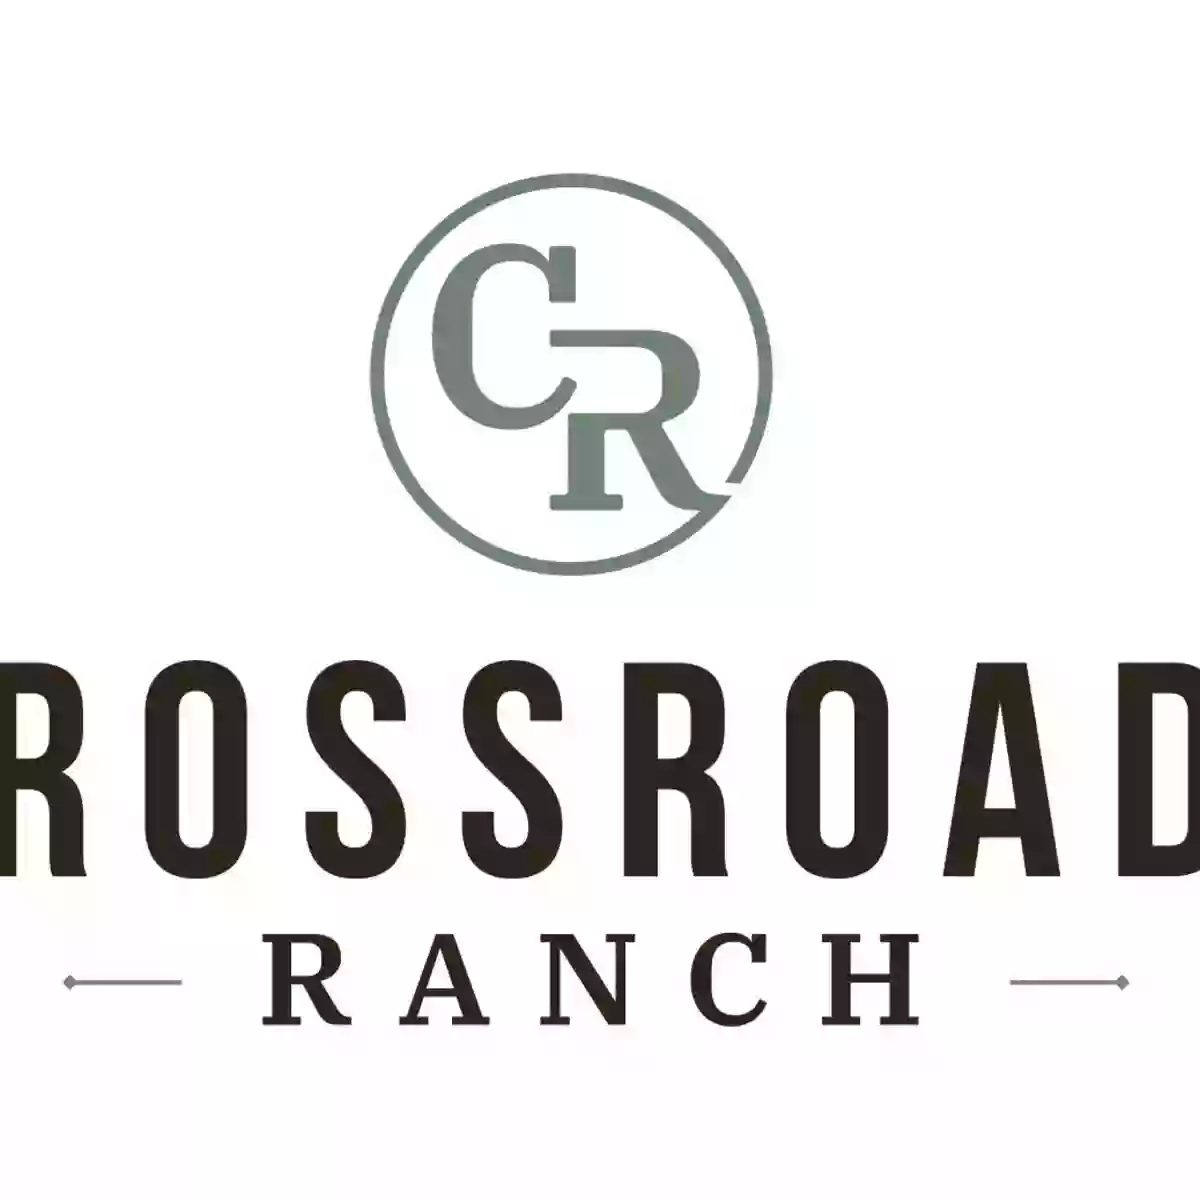 Crossroads Ranch Apartments